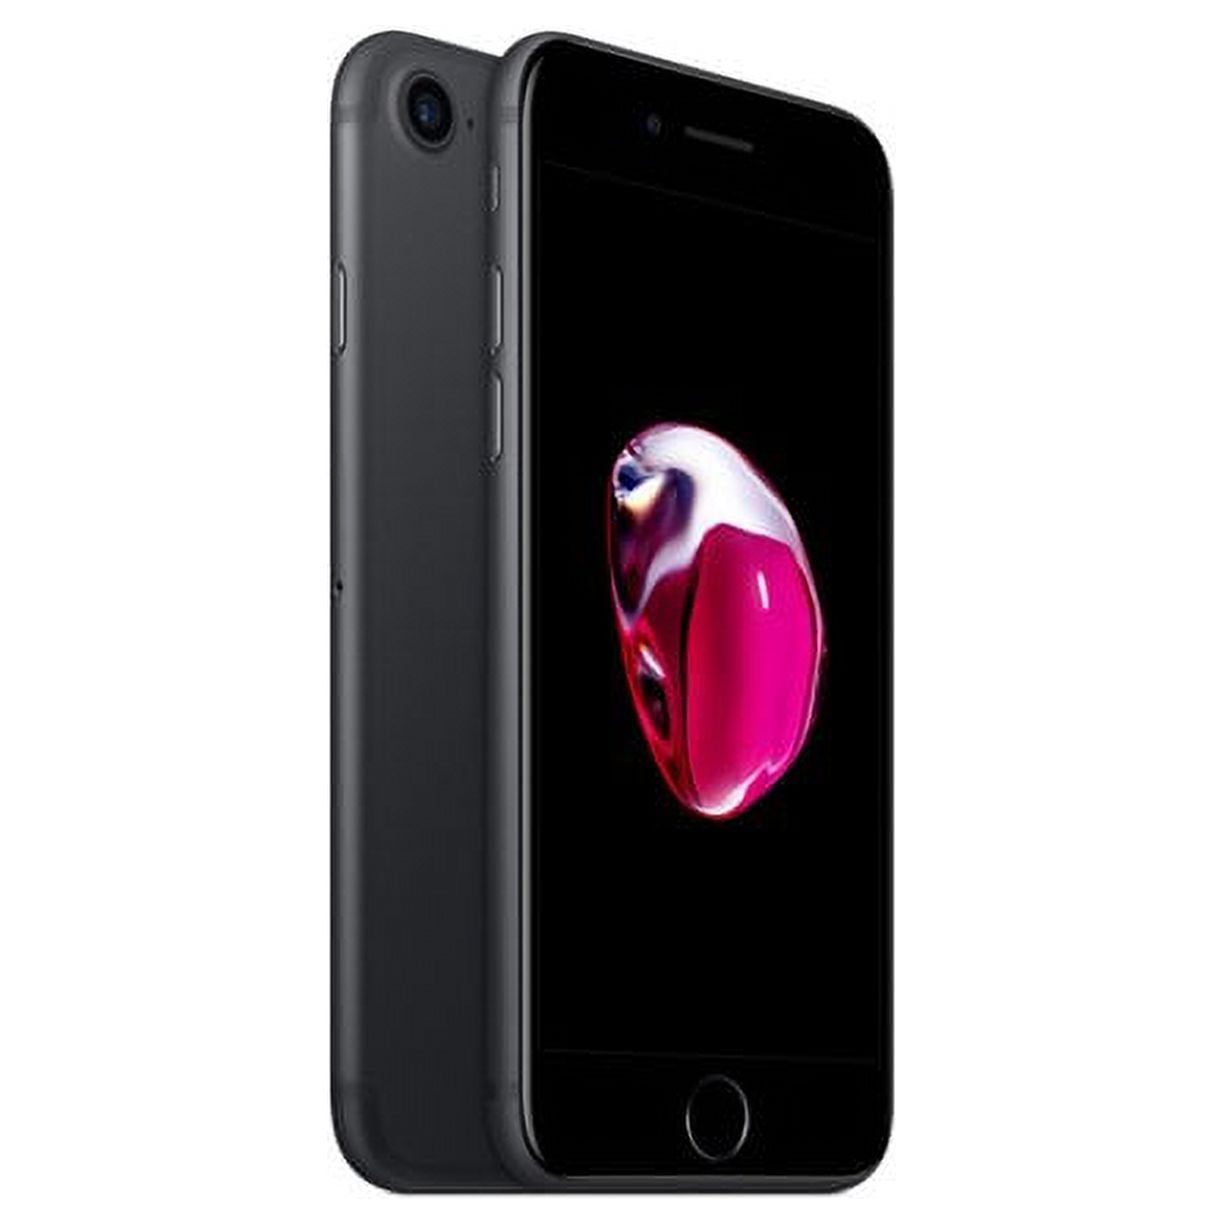 Restored Apple iPhone 7 128GB, Black - Unlocked GSM/CDMA (Refurbished)